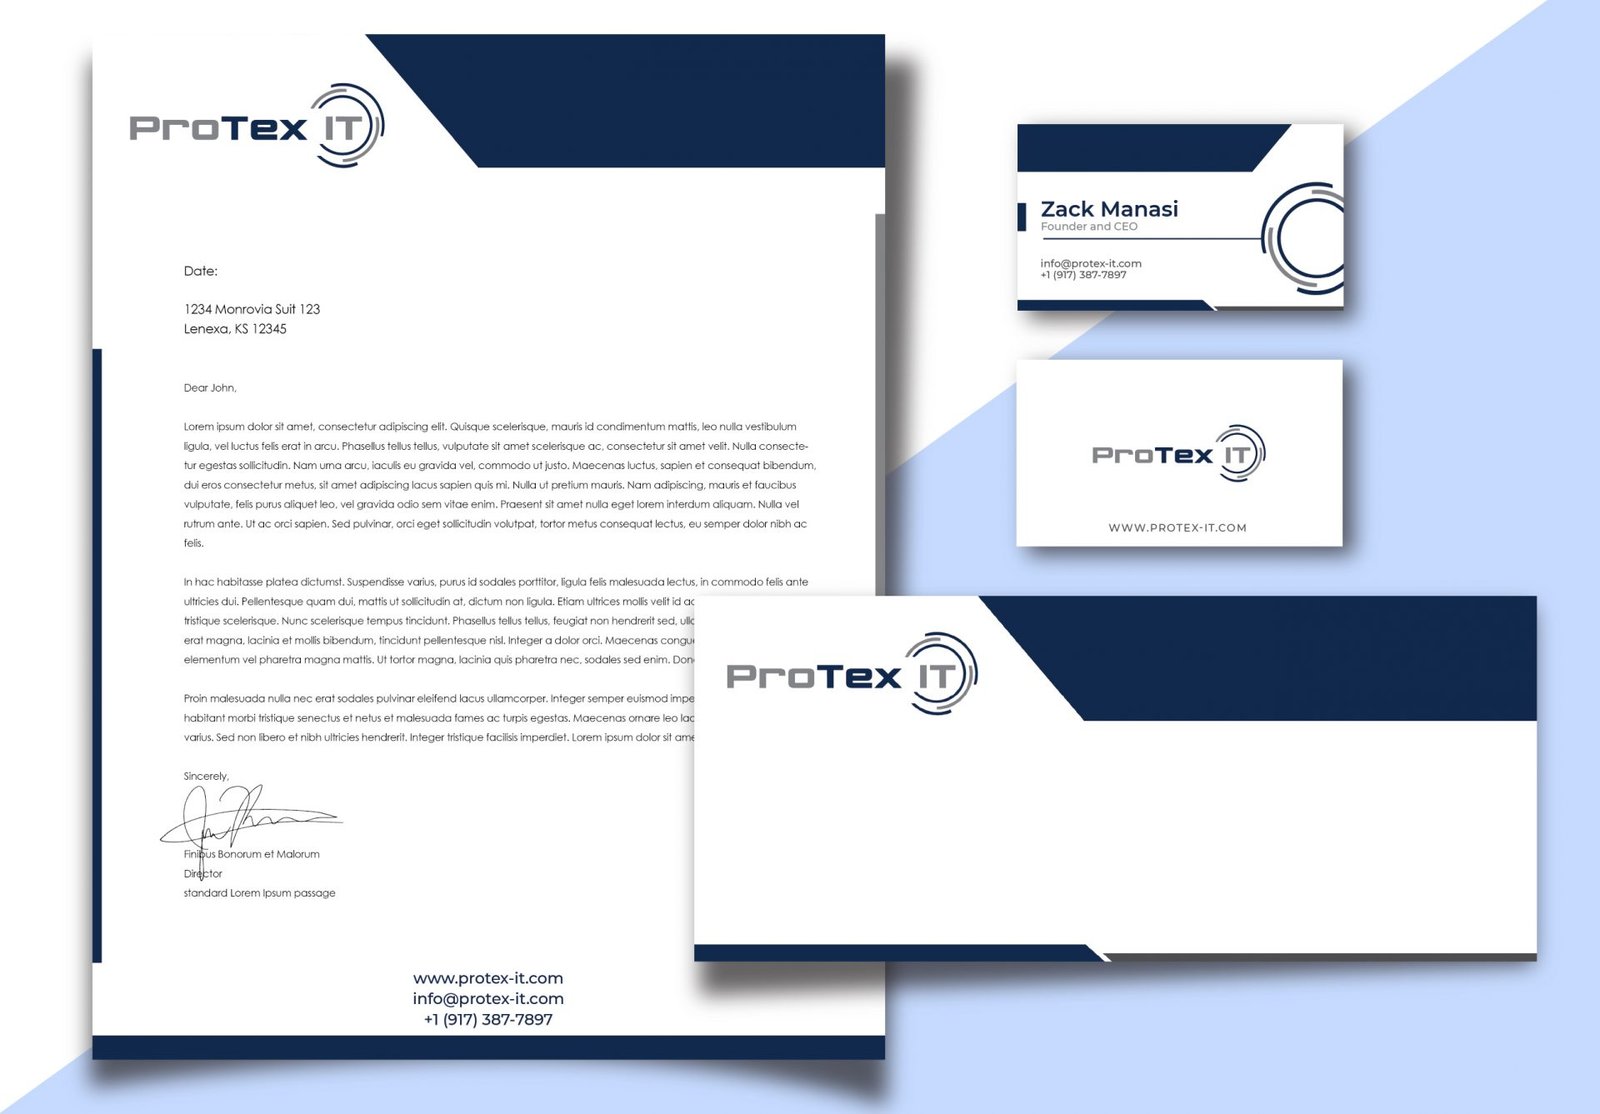 ProTex - An IT Company